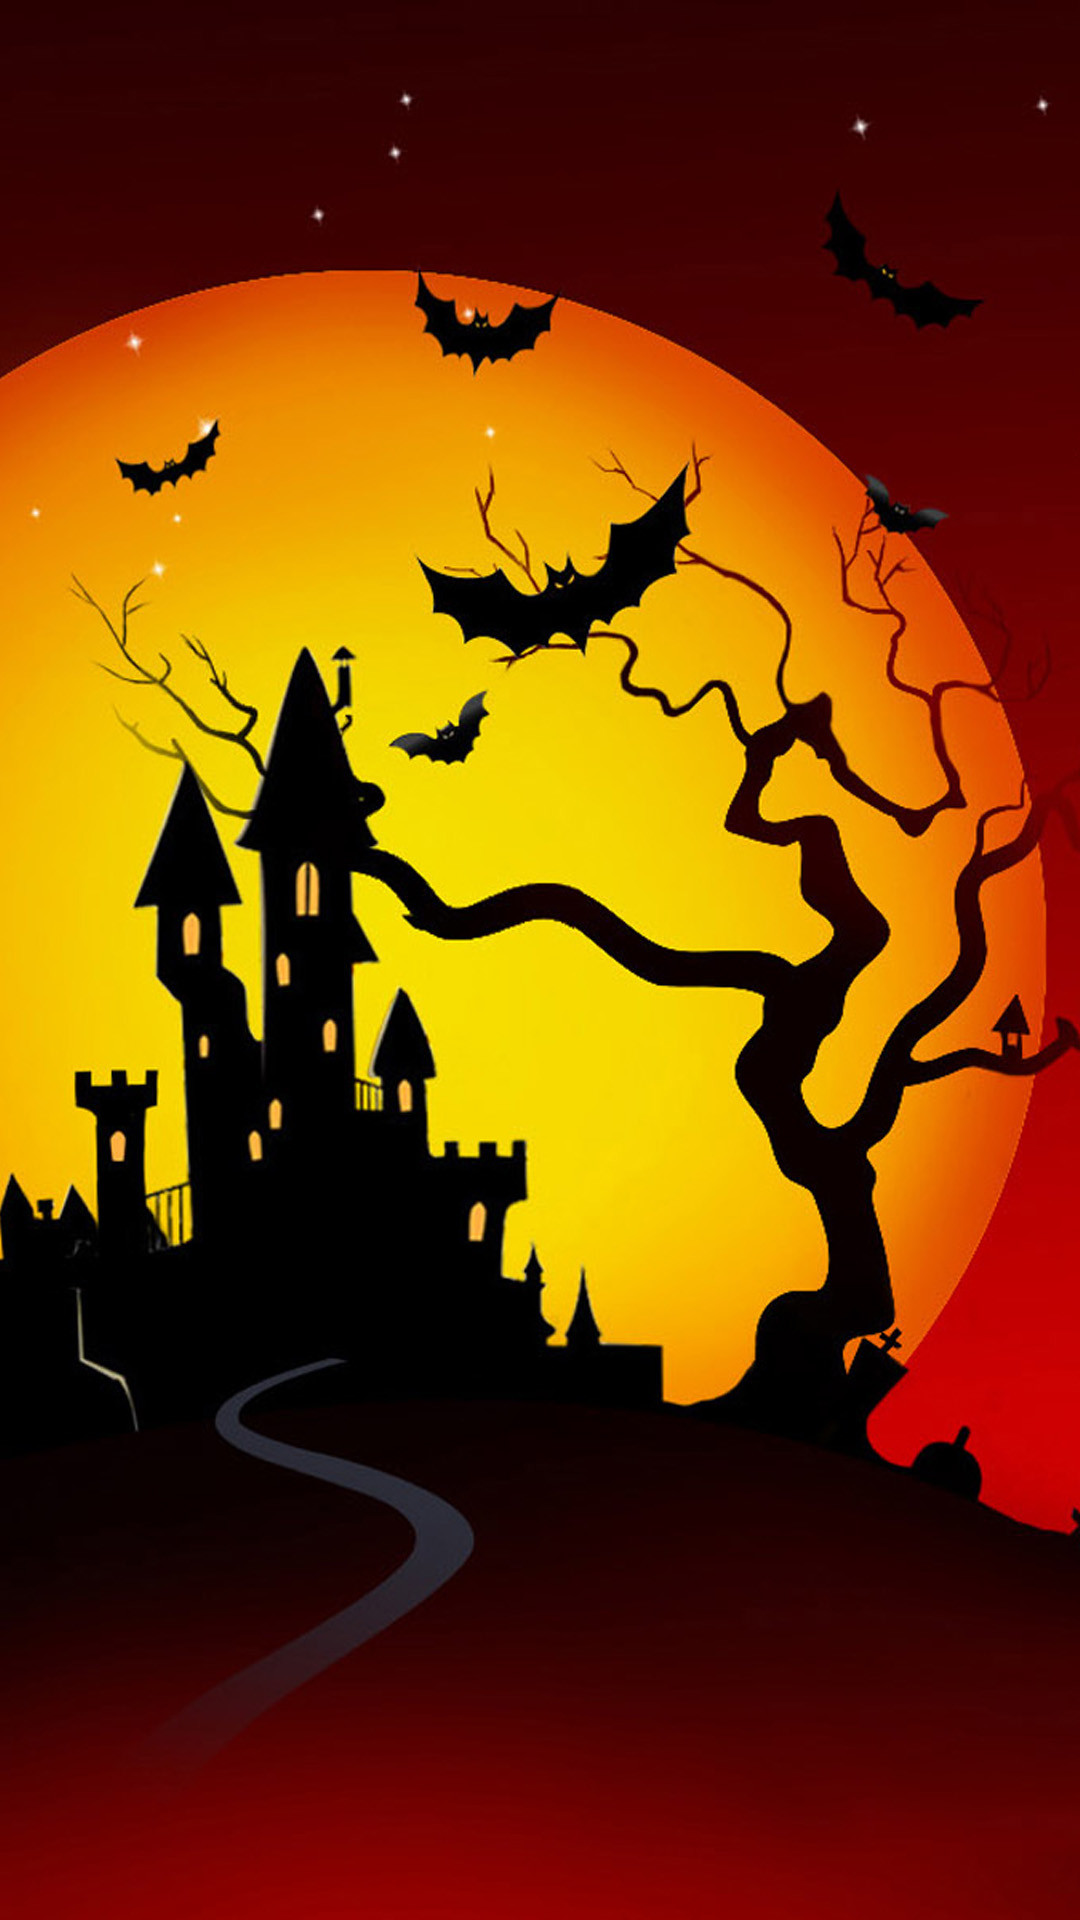 1080x1920 Free Halloween iPhone Wallpaper Backgrounds Download.